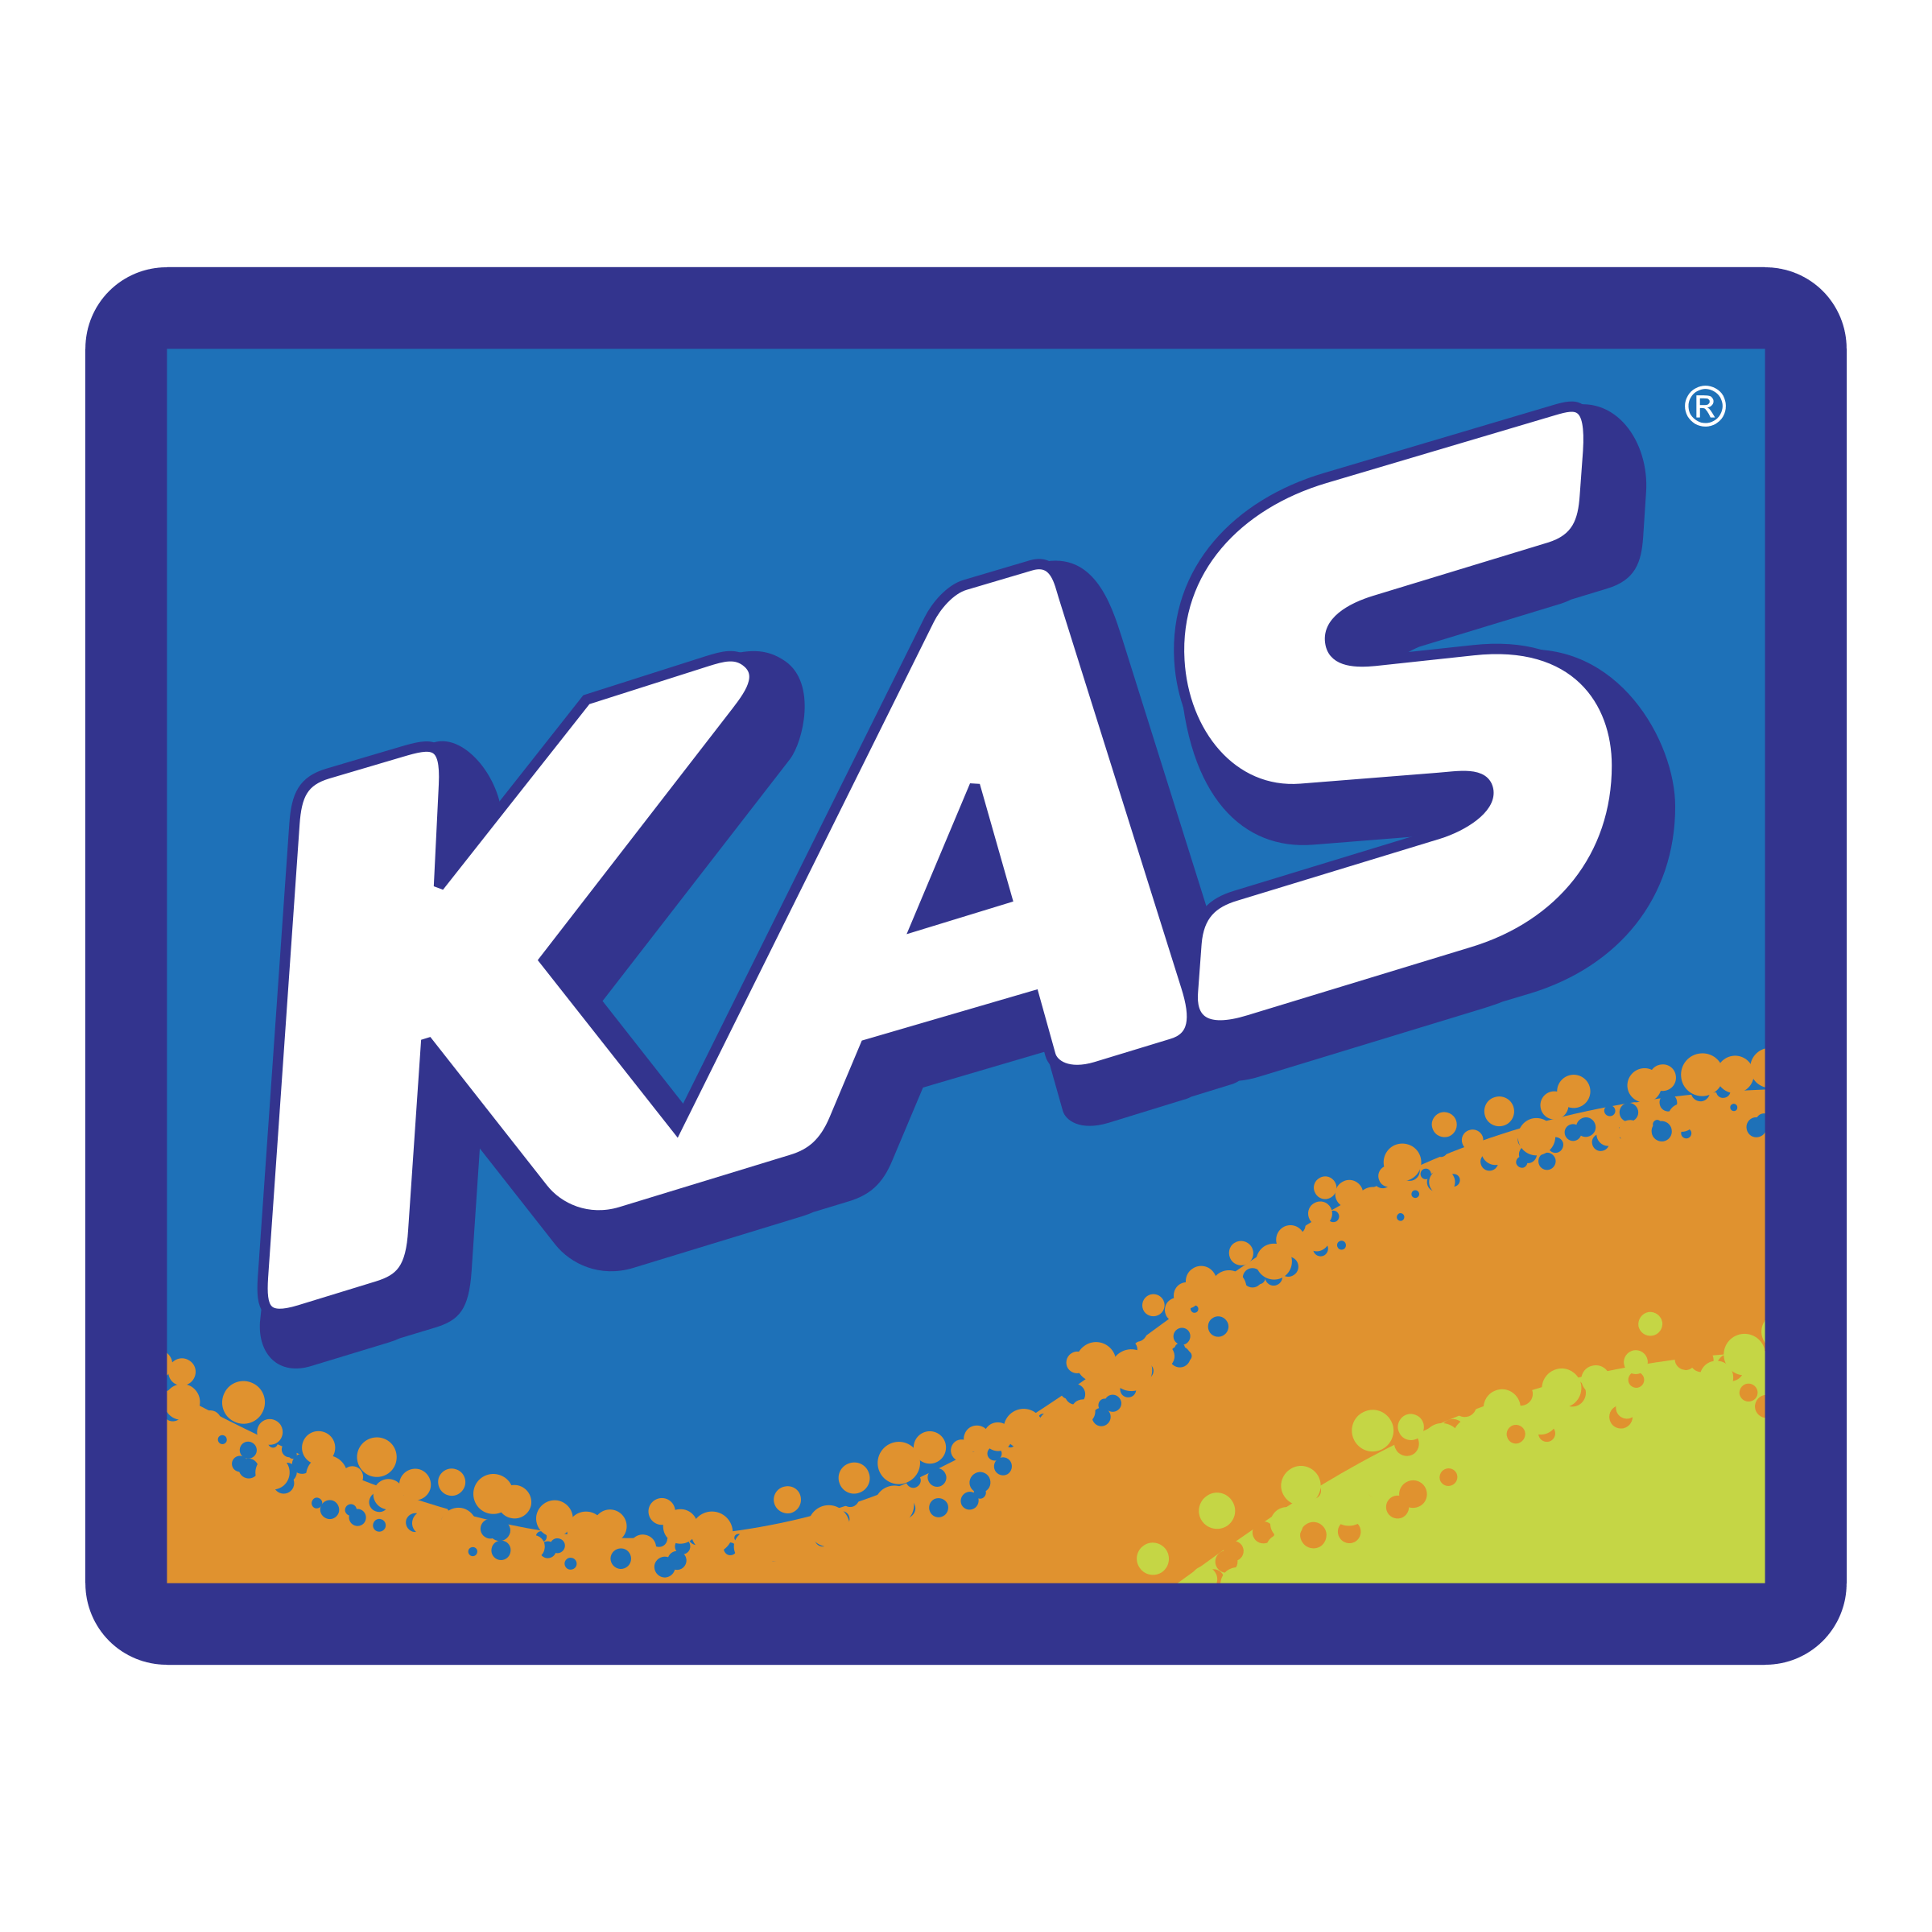 Kas Logo - KAS Logo PNG Transparent & SVG Vector - Freebie Supply